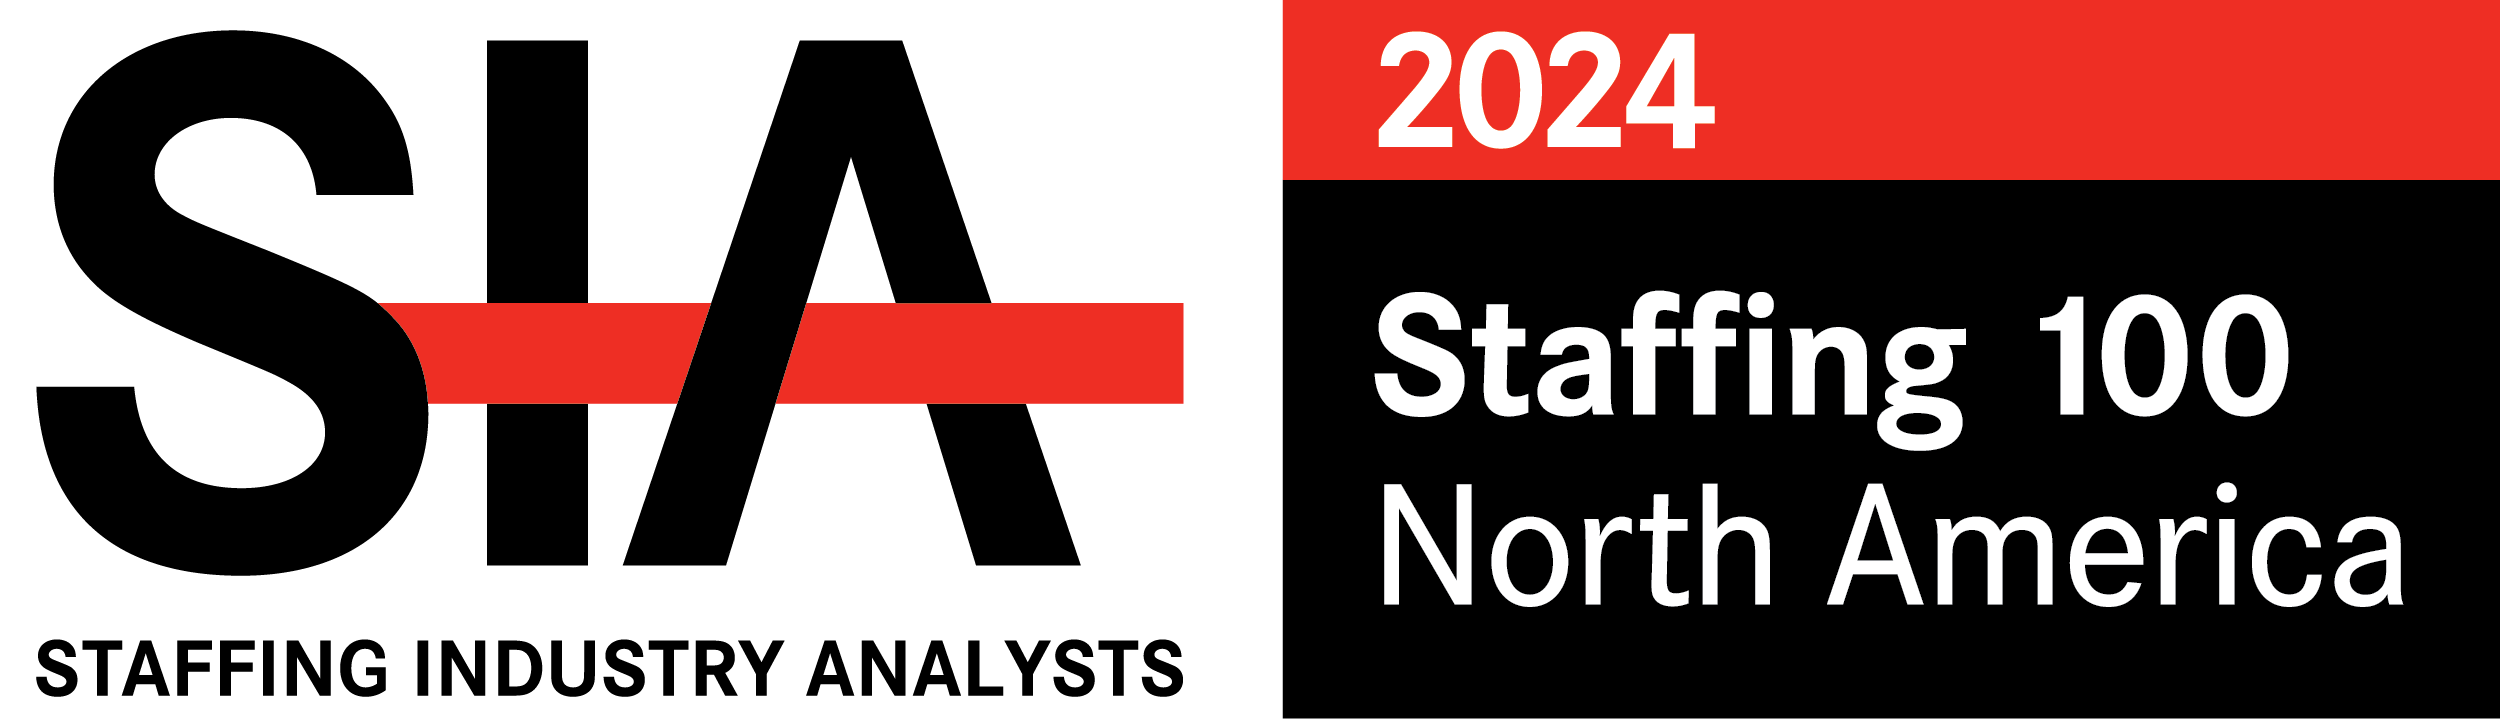 SIA_2024__Staffing100_North America logo